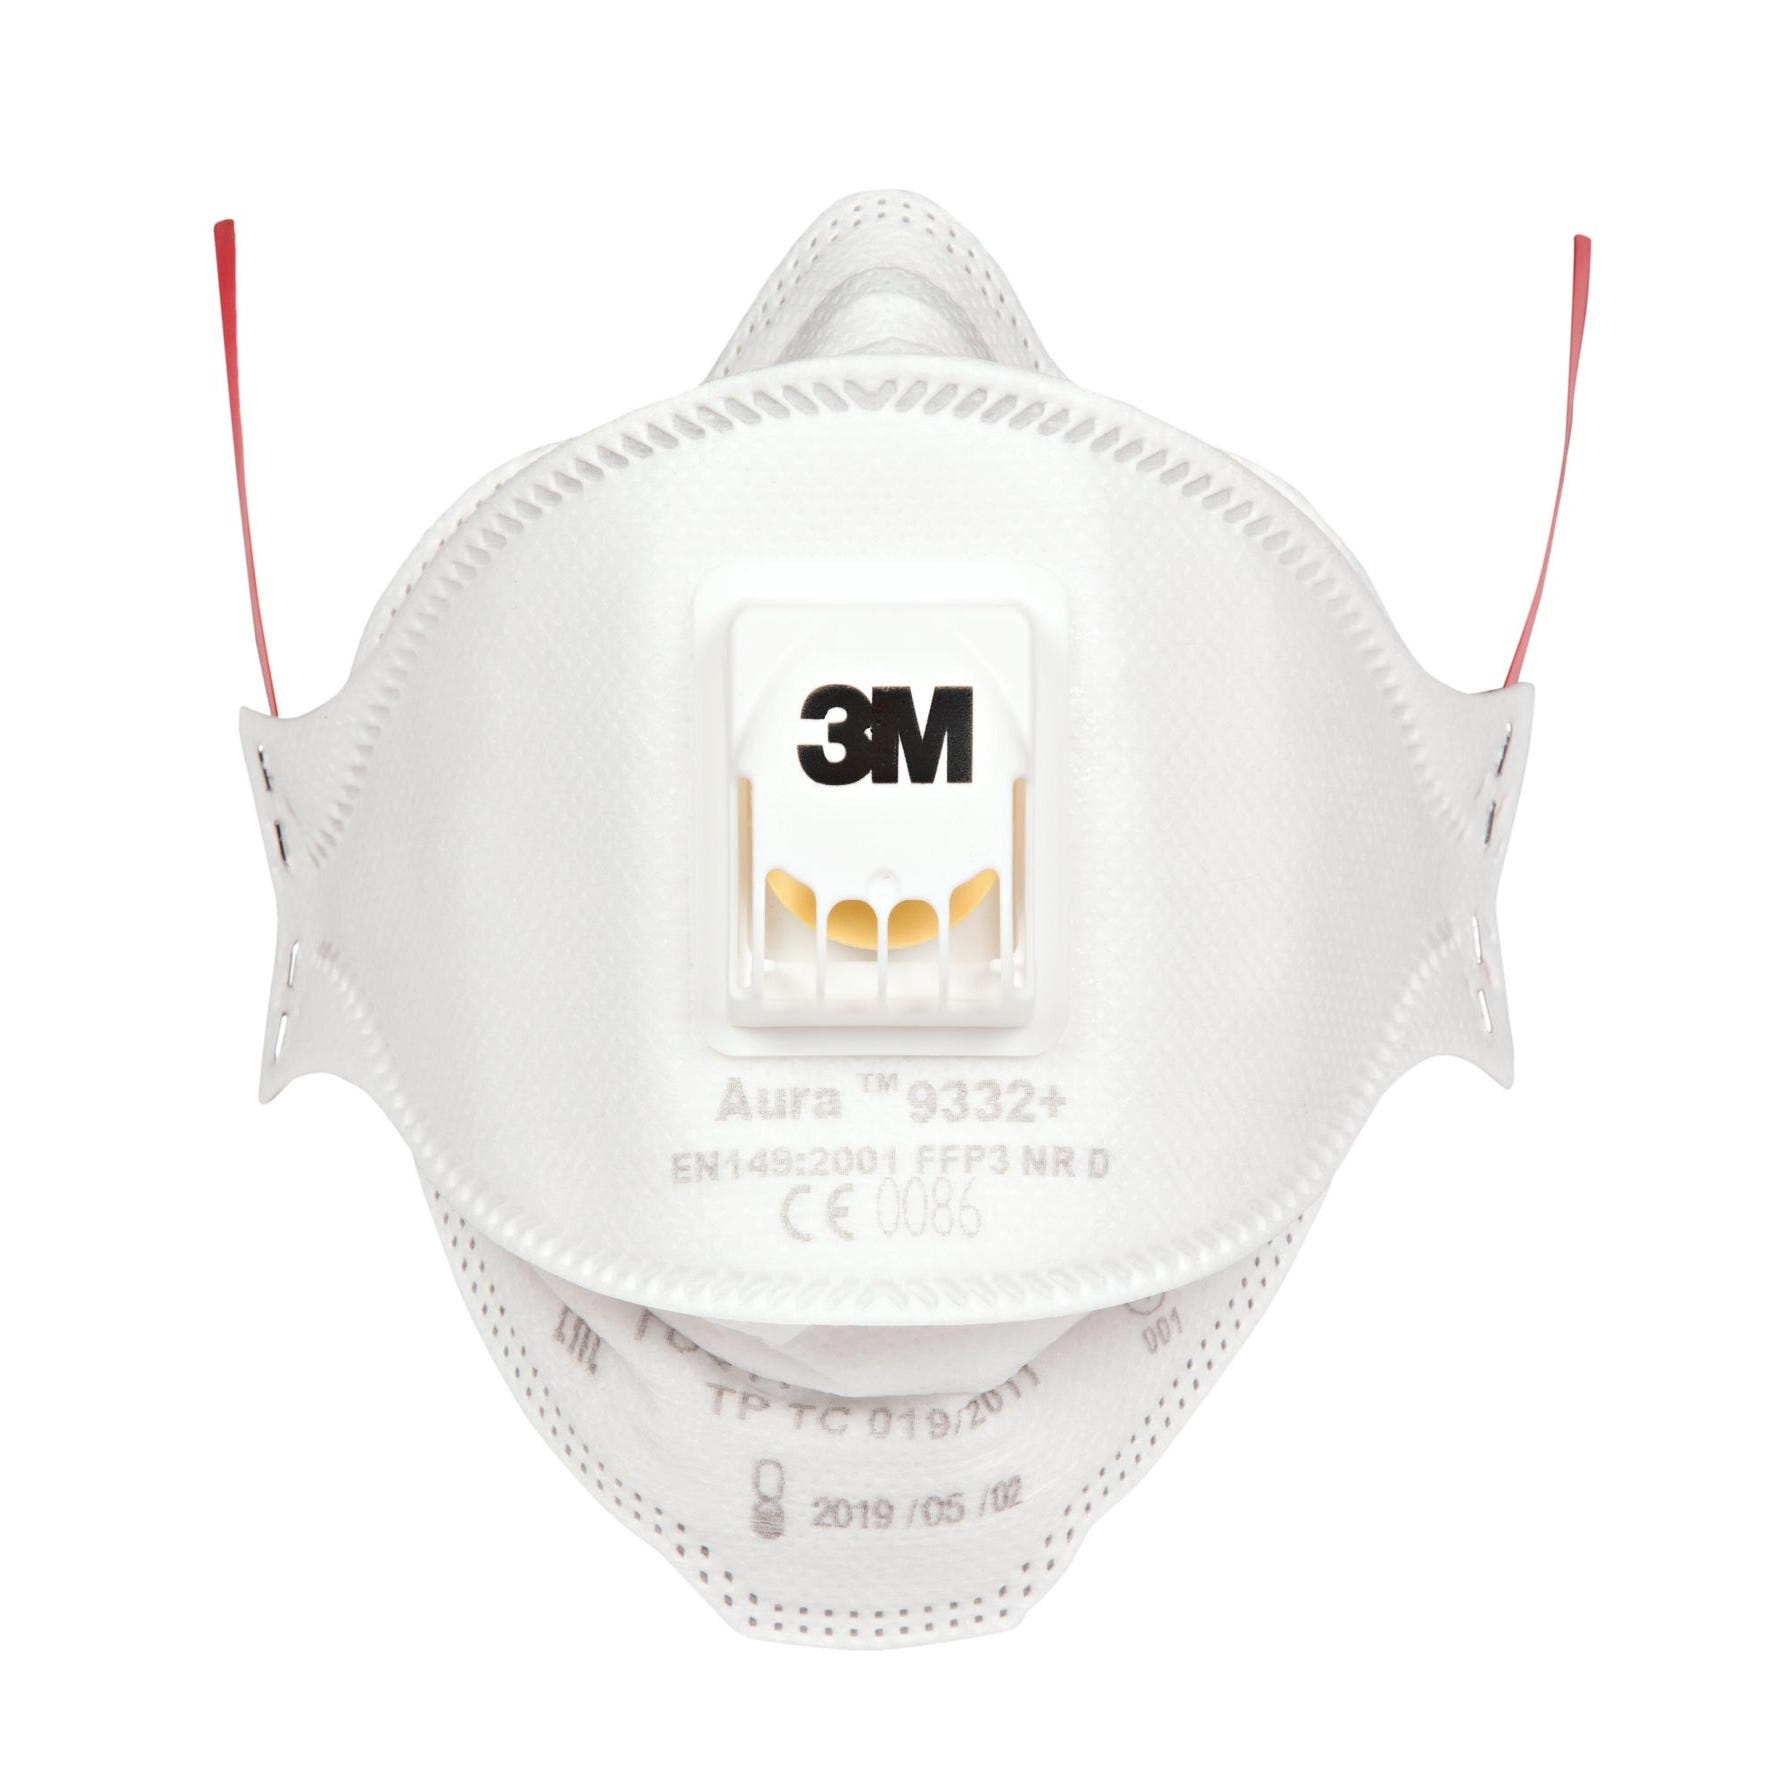 Masque de protection 3M FFP3